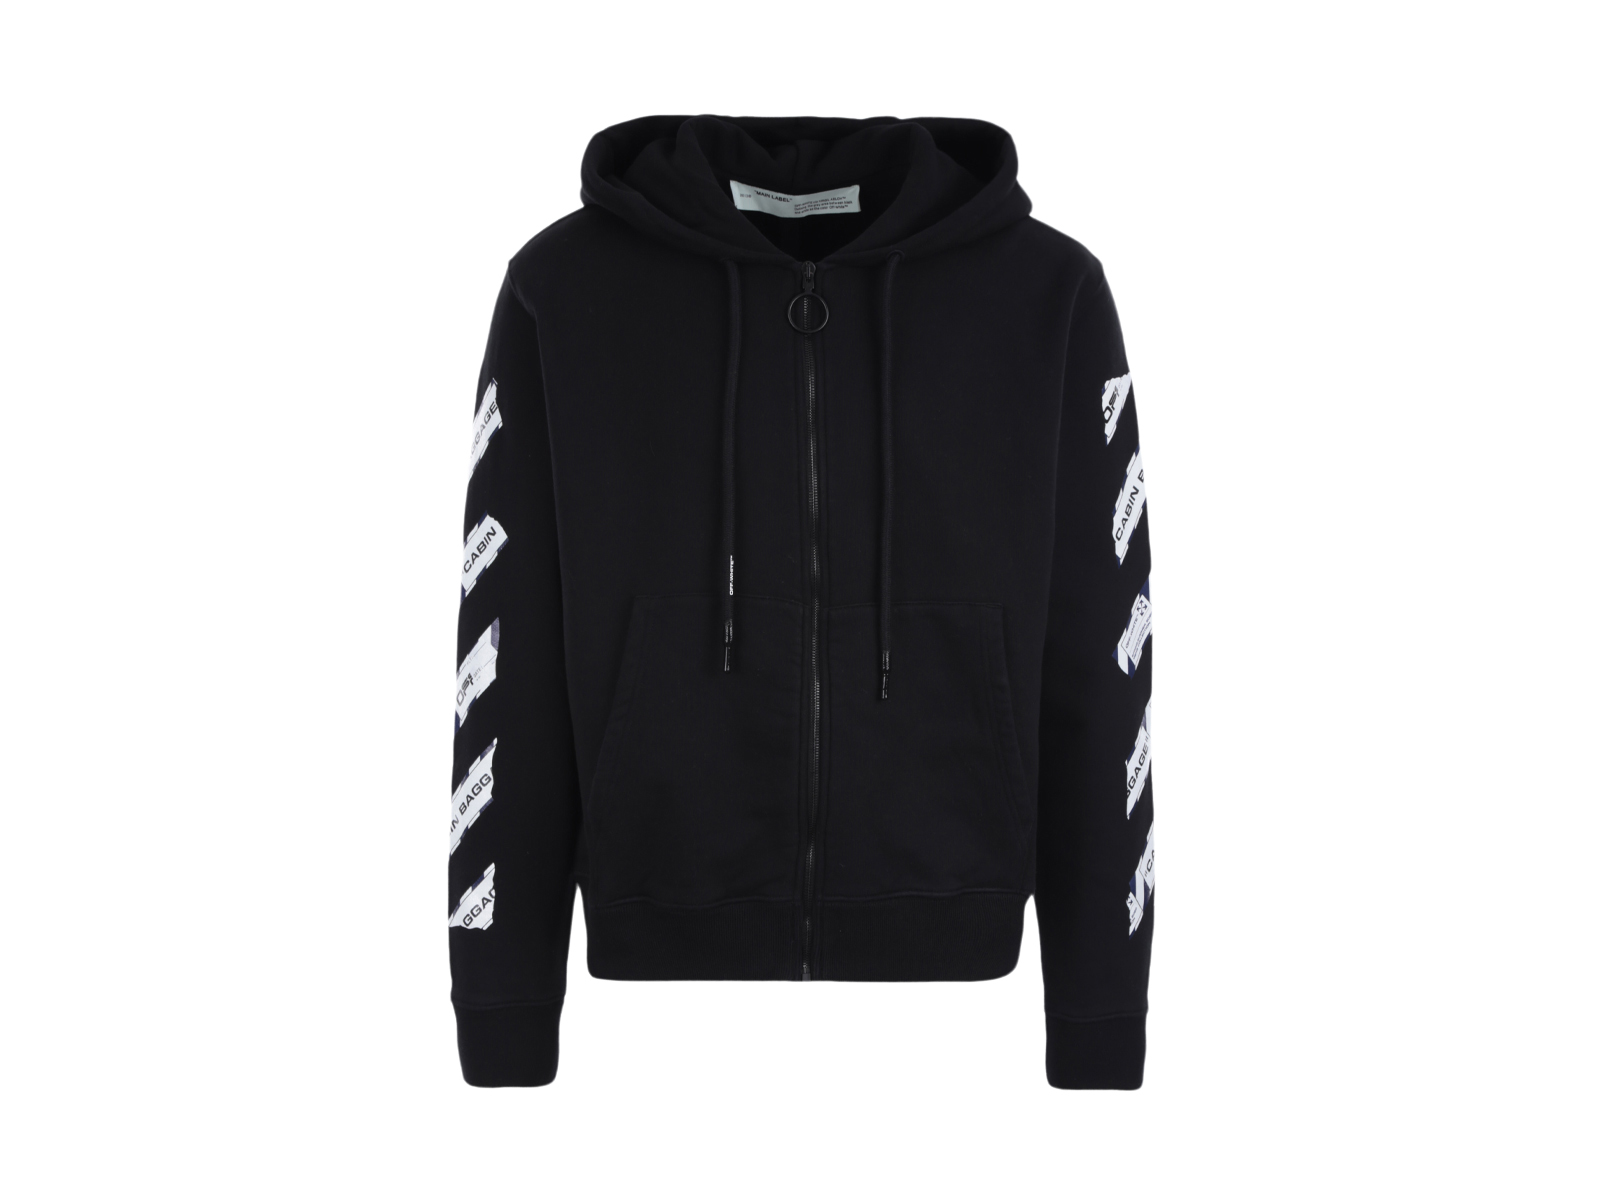 Off-white Caravaggio Arrows Zipup hoodie